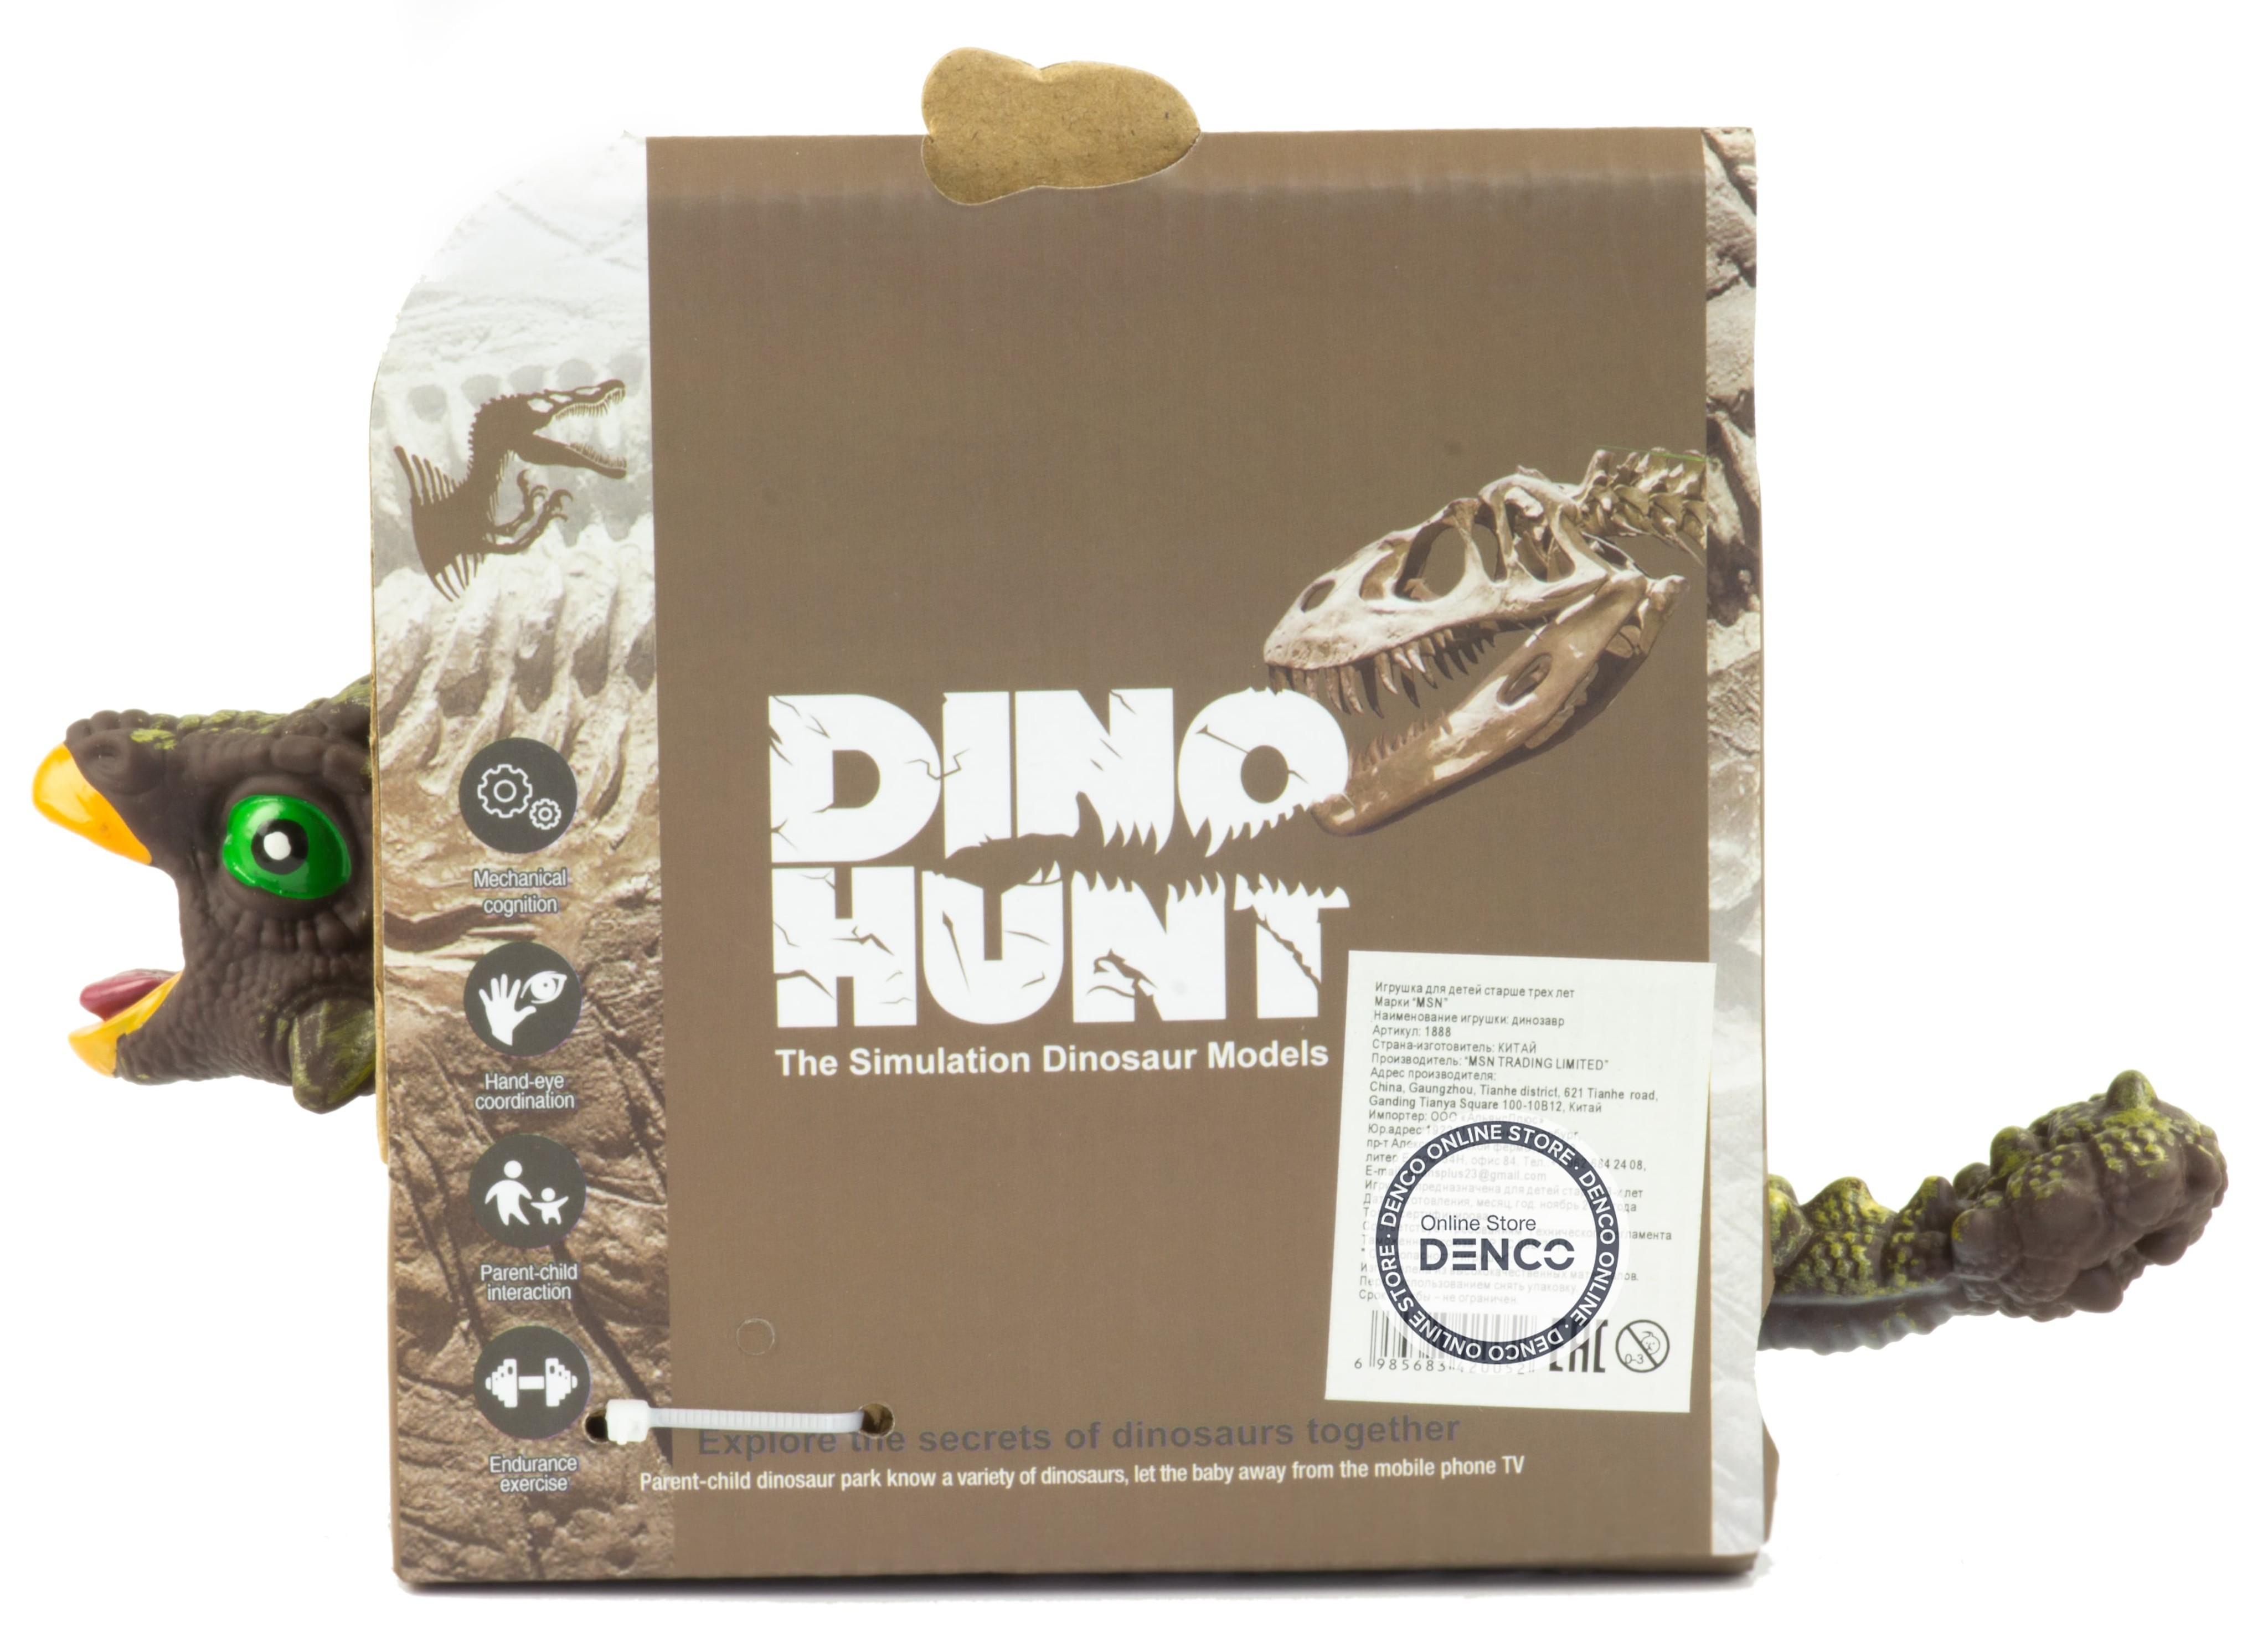 Фигурка резинового динозавра «Dino Hunt» 1888-4 со звуком 1 шт. / Анкилозавр